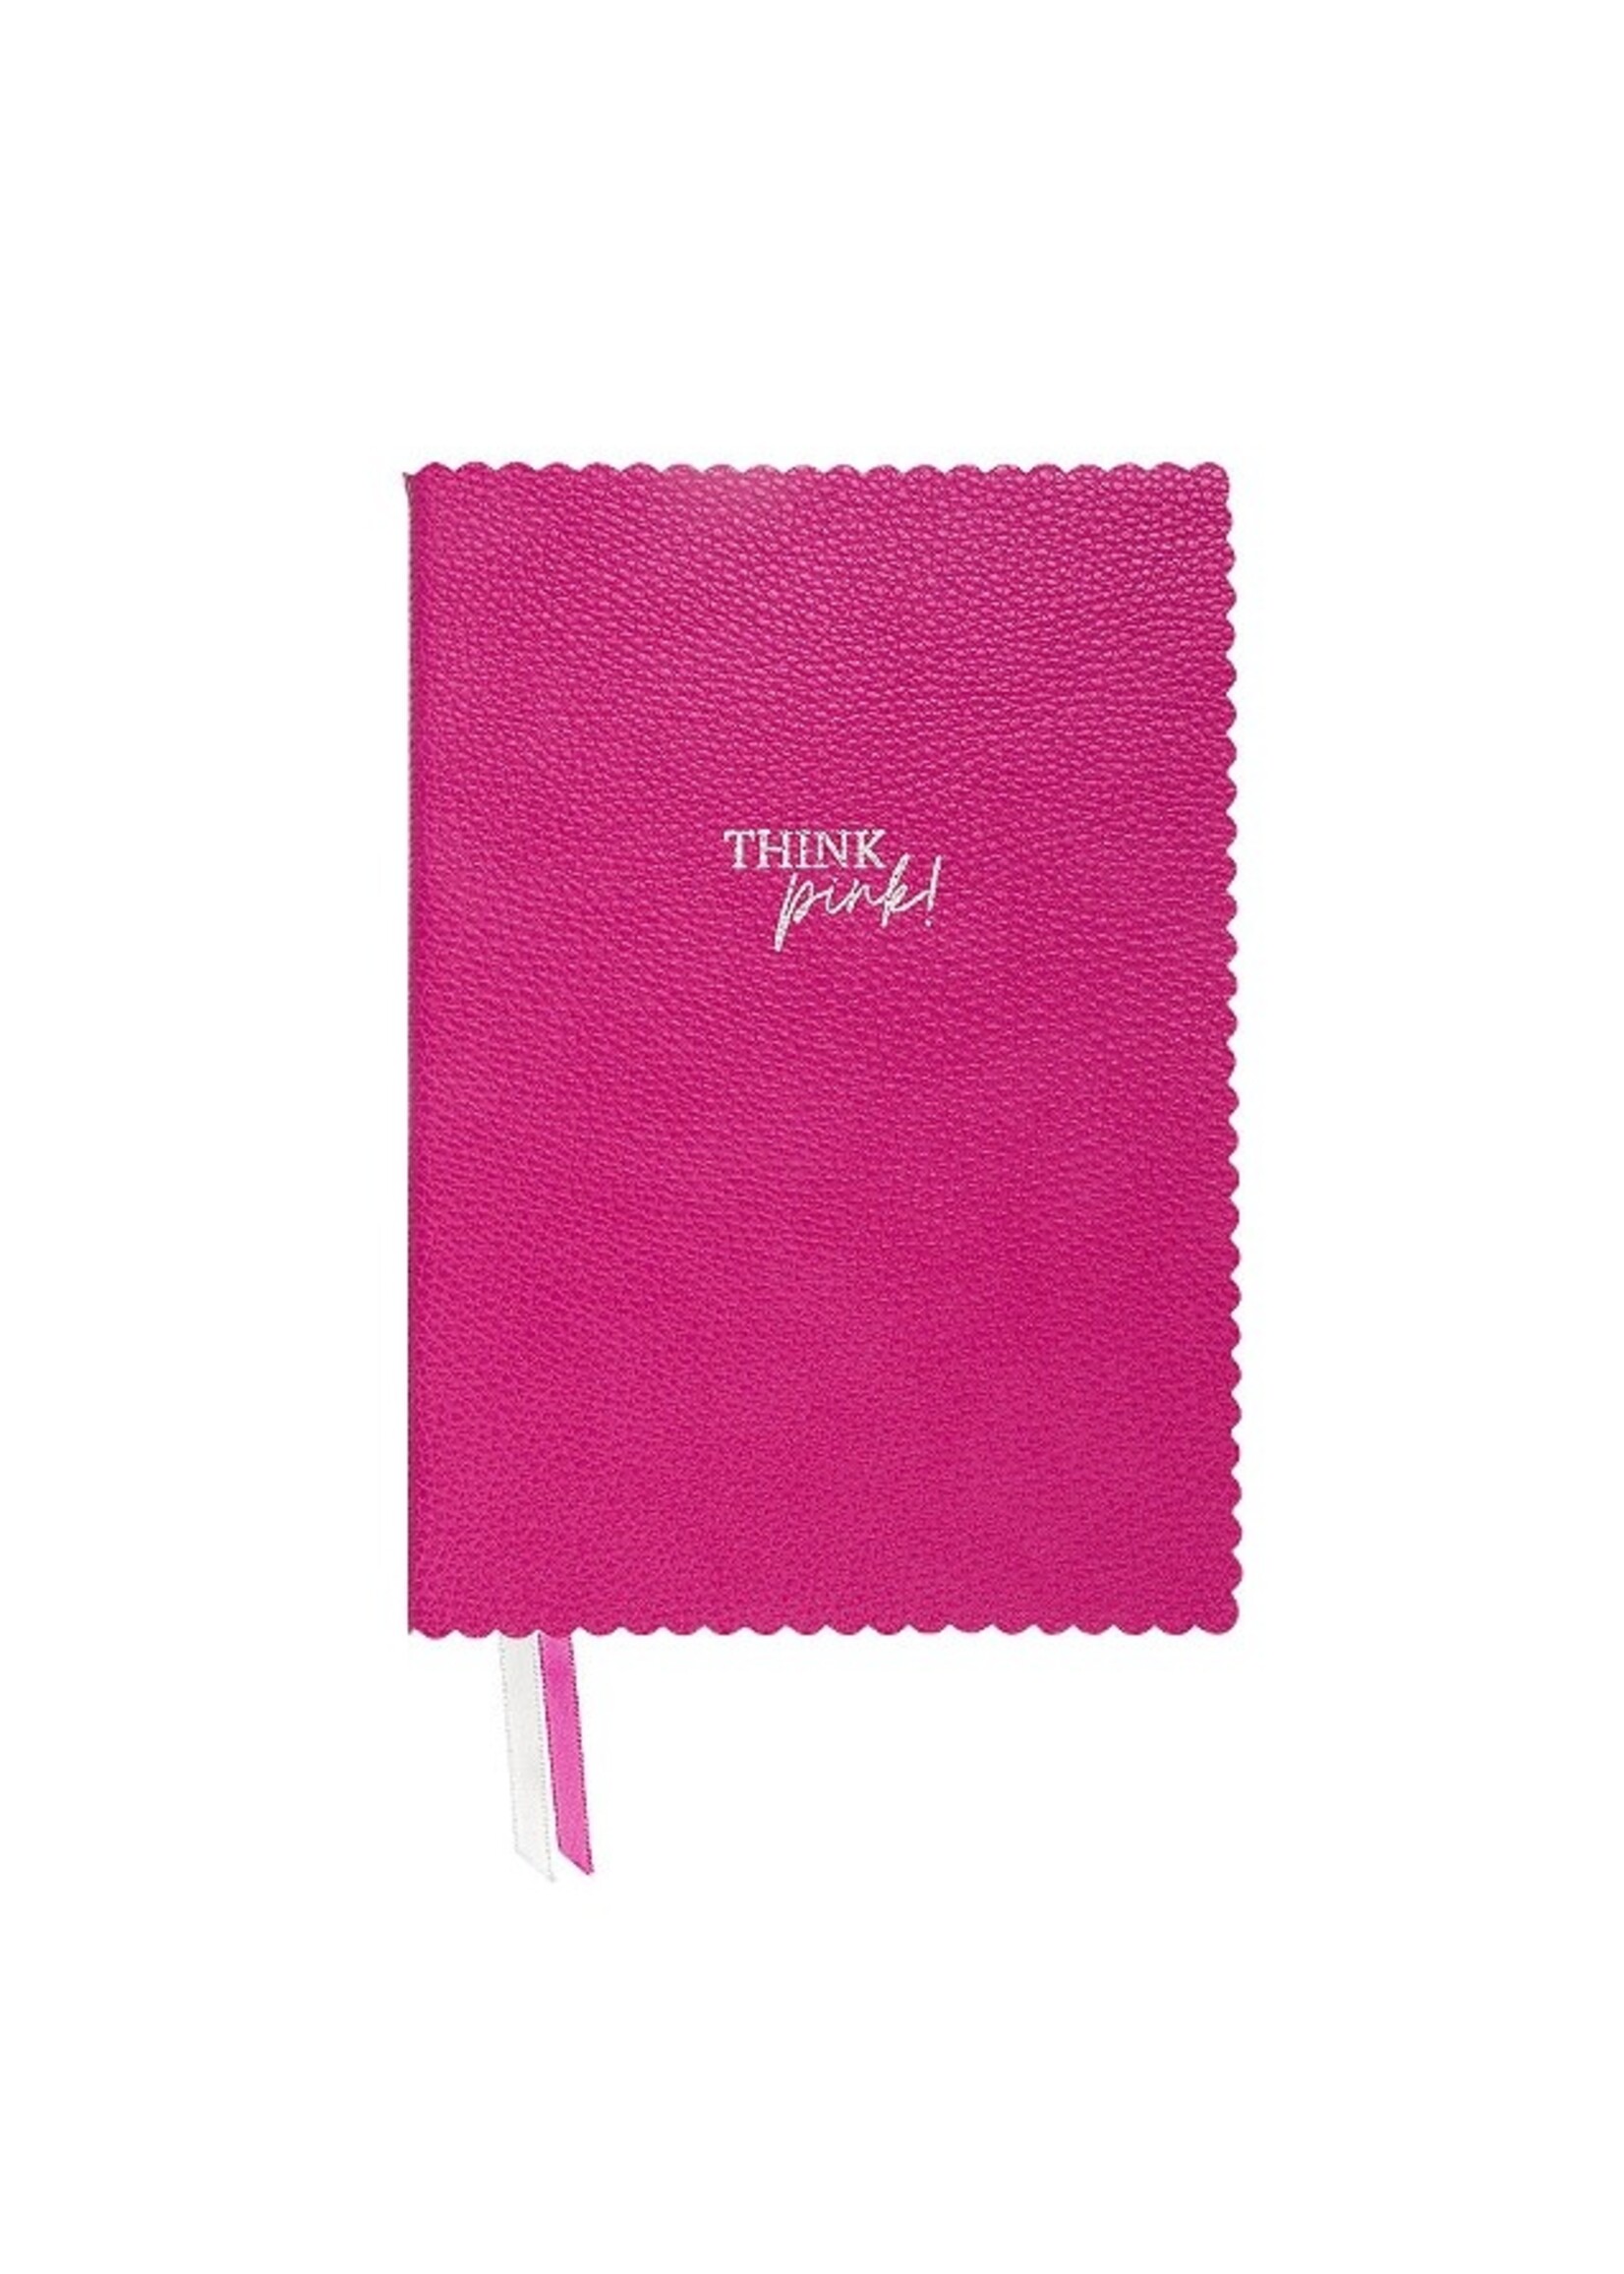 Majoie Notizbuch DIN A5 Think pink!